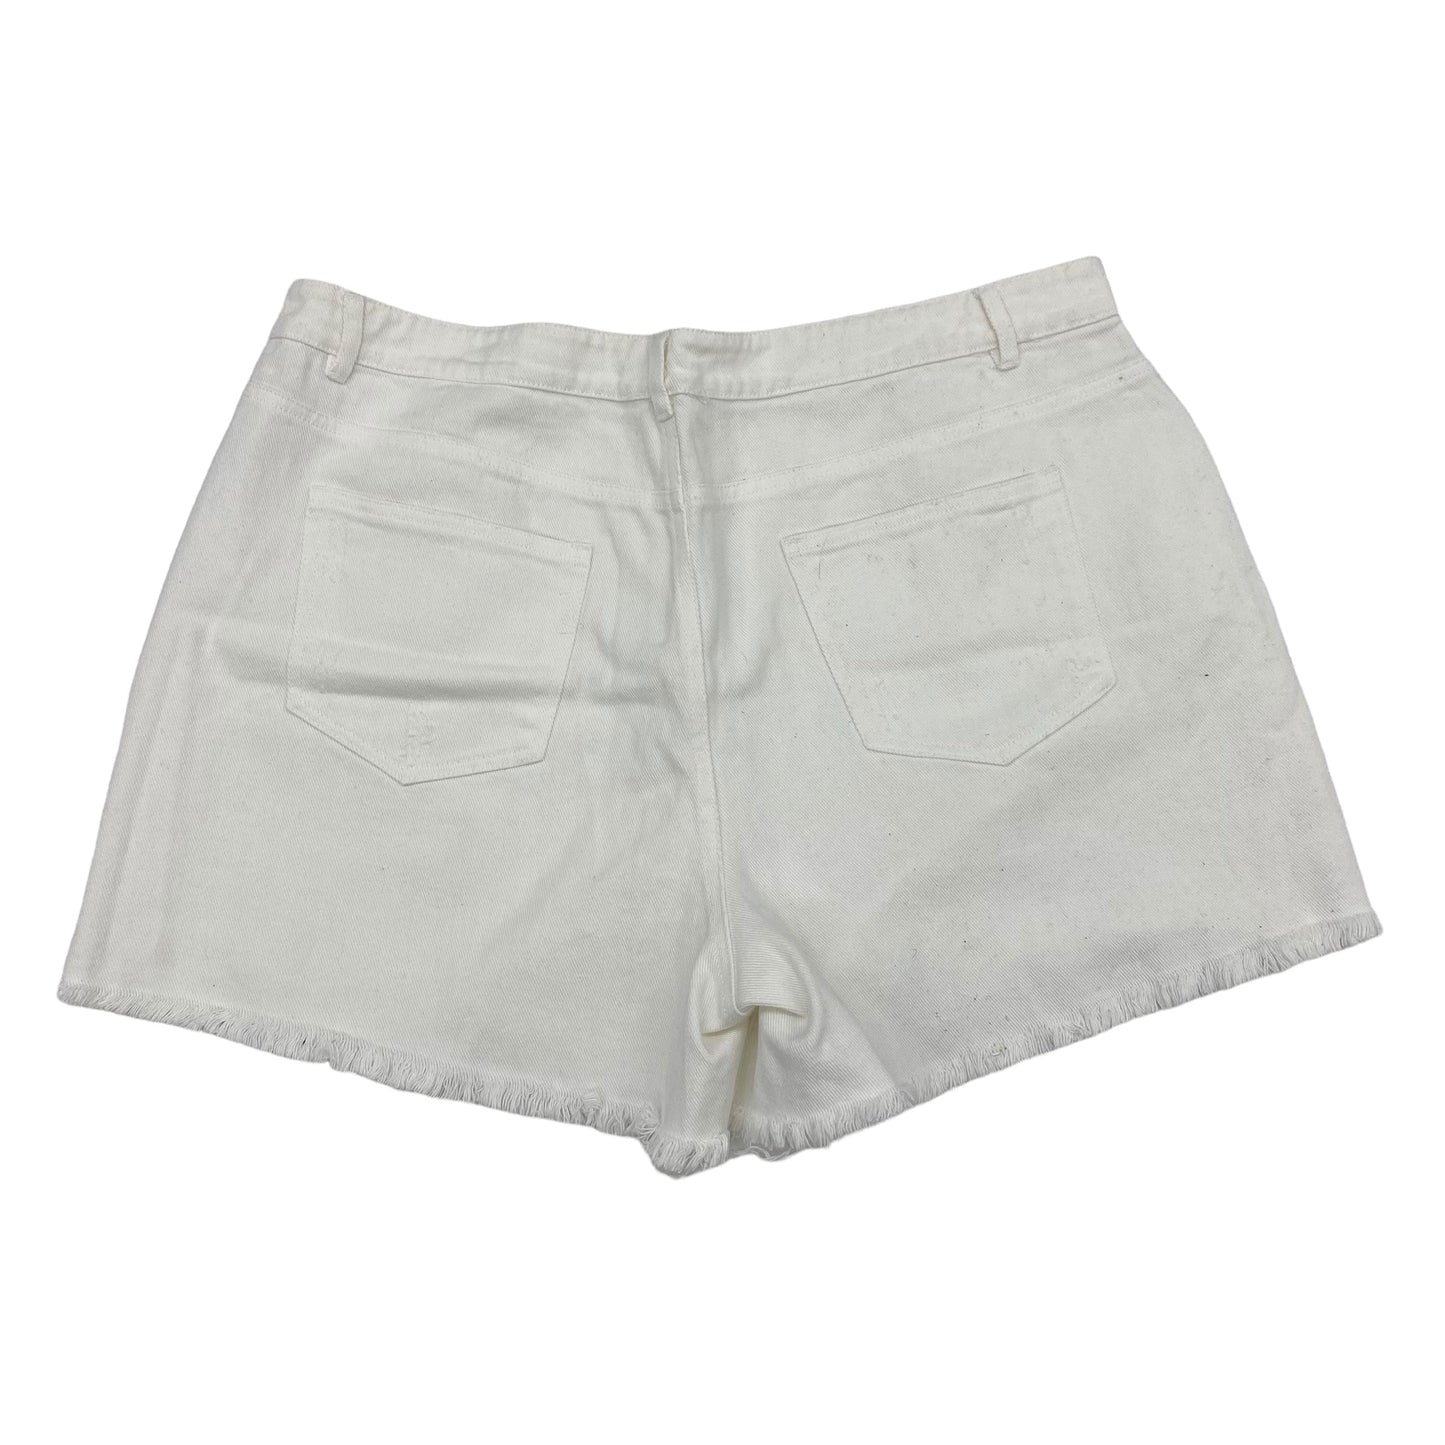 White Denim Shorts Clothes Mentor, Size 3x